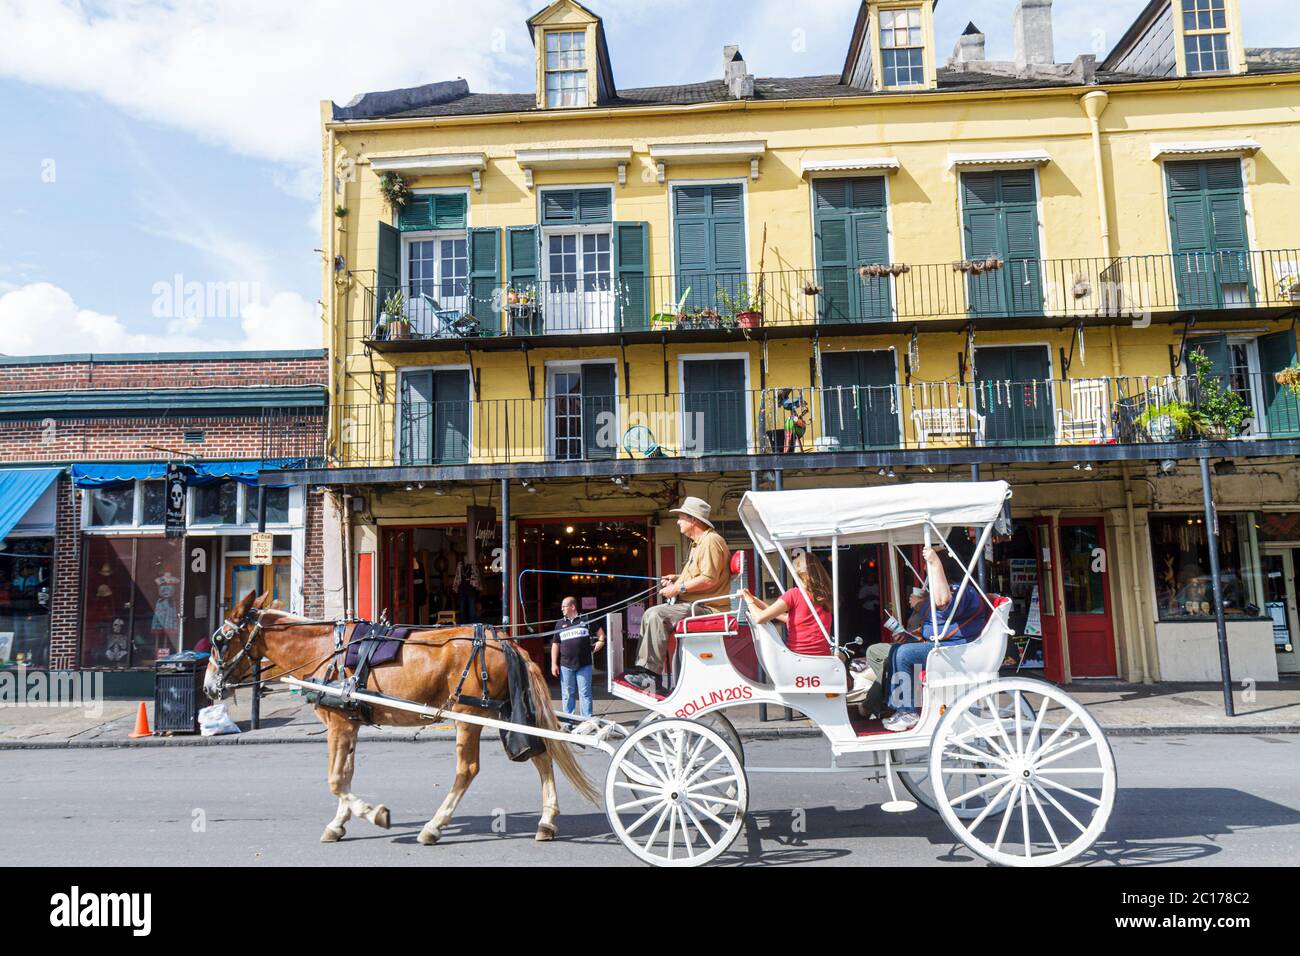 New Orleans Louisiana,French Quarter,907 Decatur,architecture heritage building,gallery,balcony,dormer window,man men male,woman female women,mule,car Stock Photo